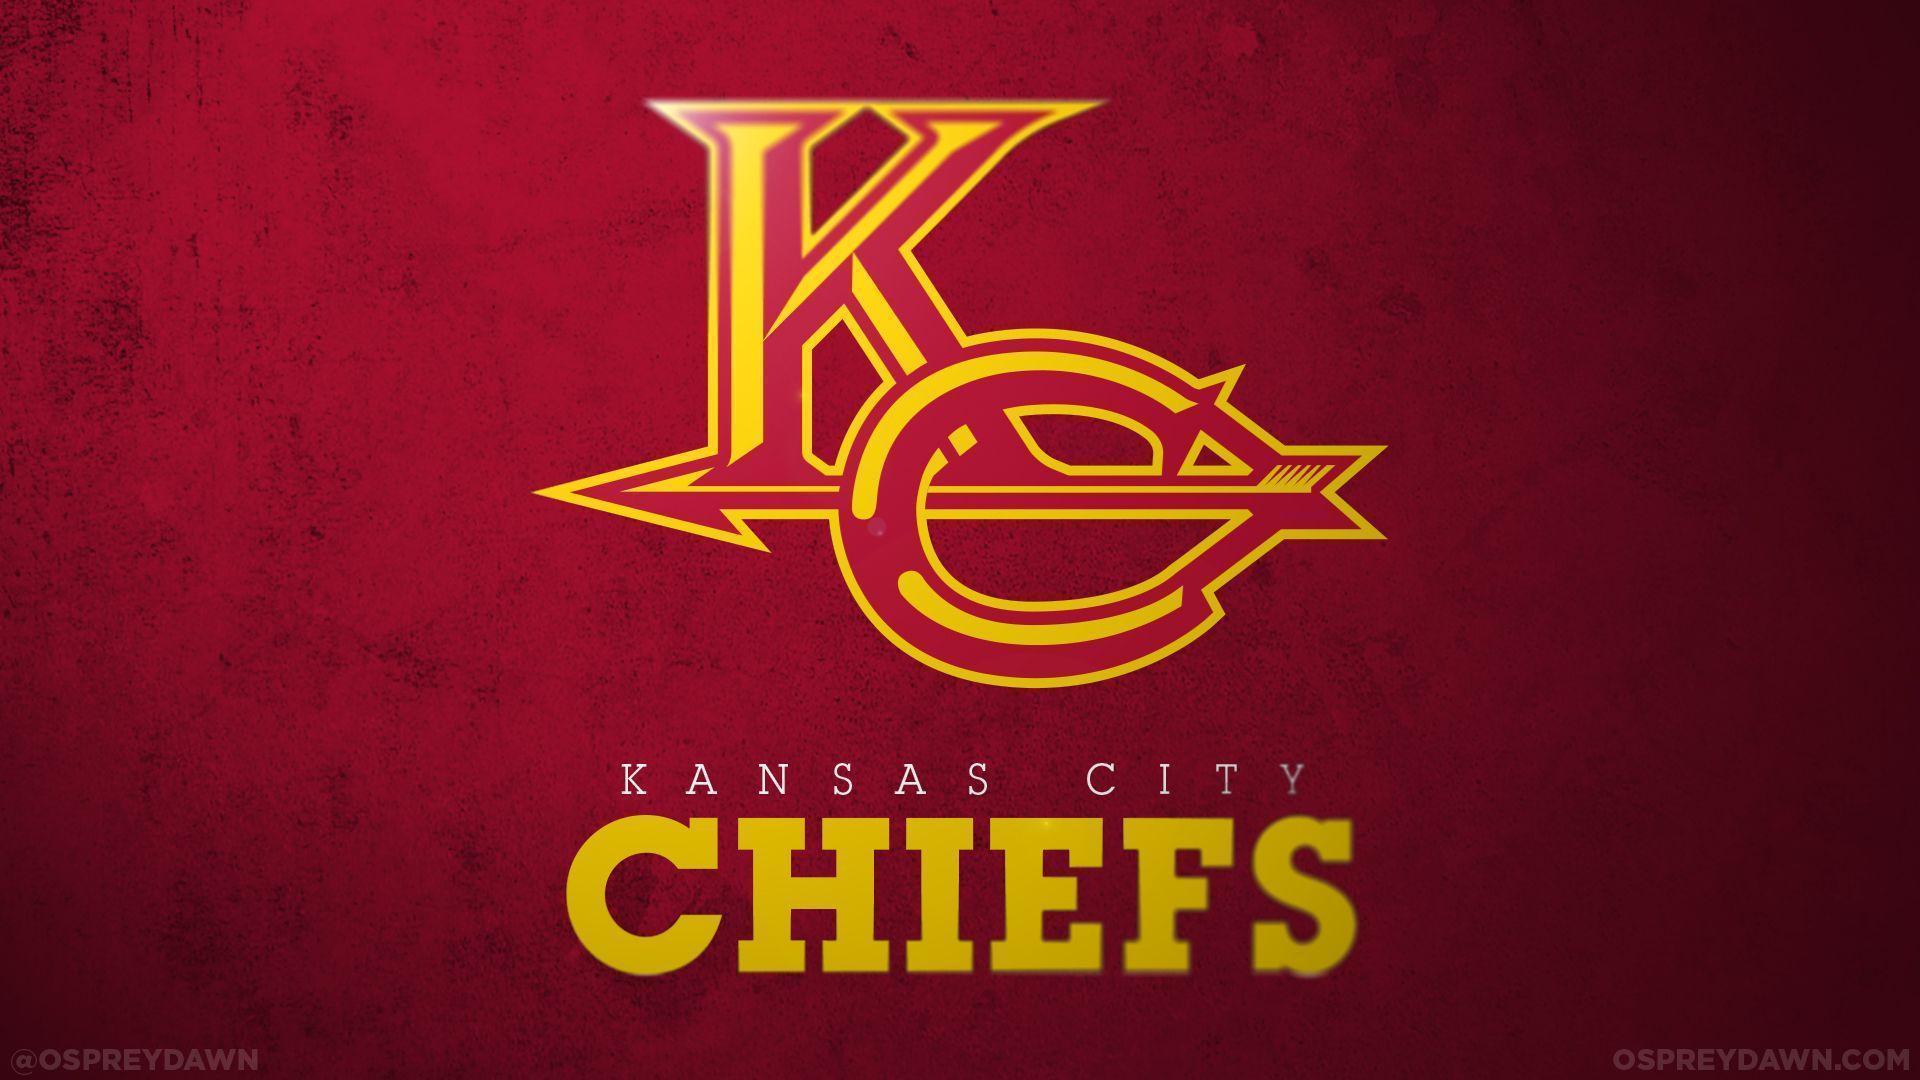 Kansas City Chiefs Wallpapers - Top